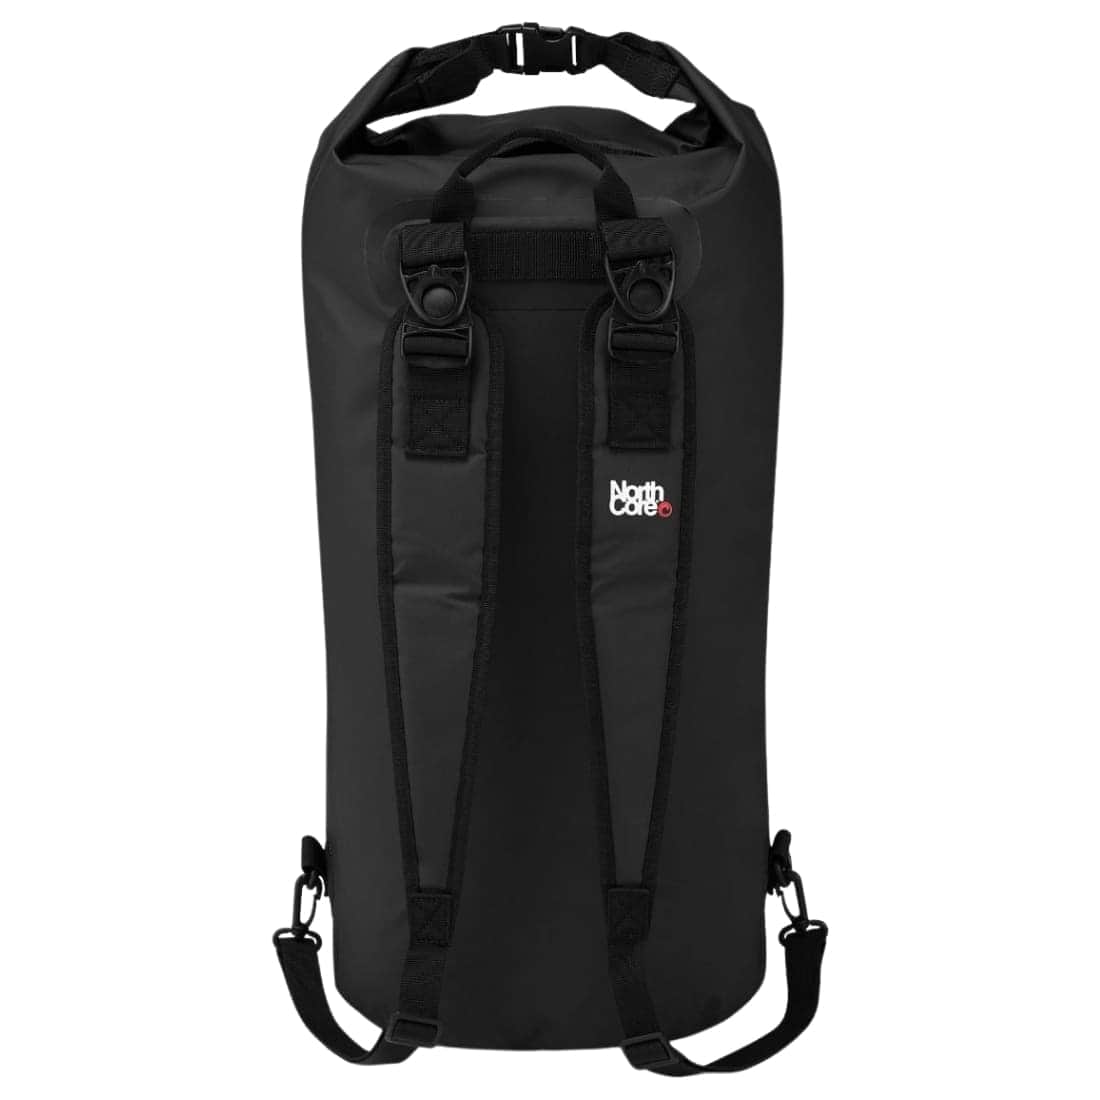 Northcore 30L Dry Bag Backpack - Black